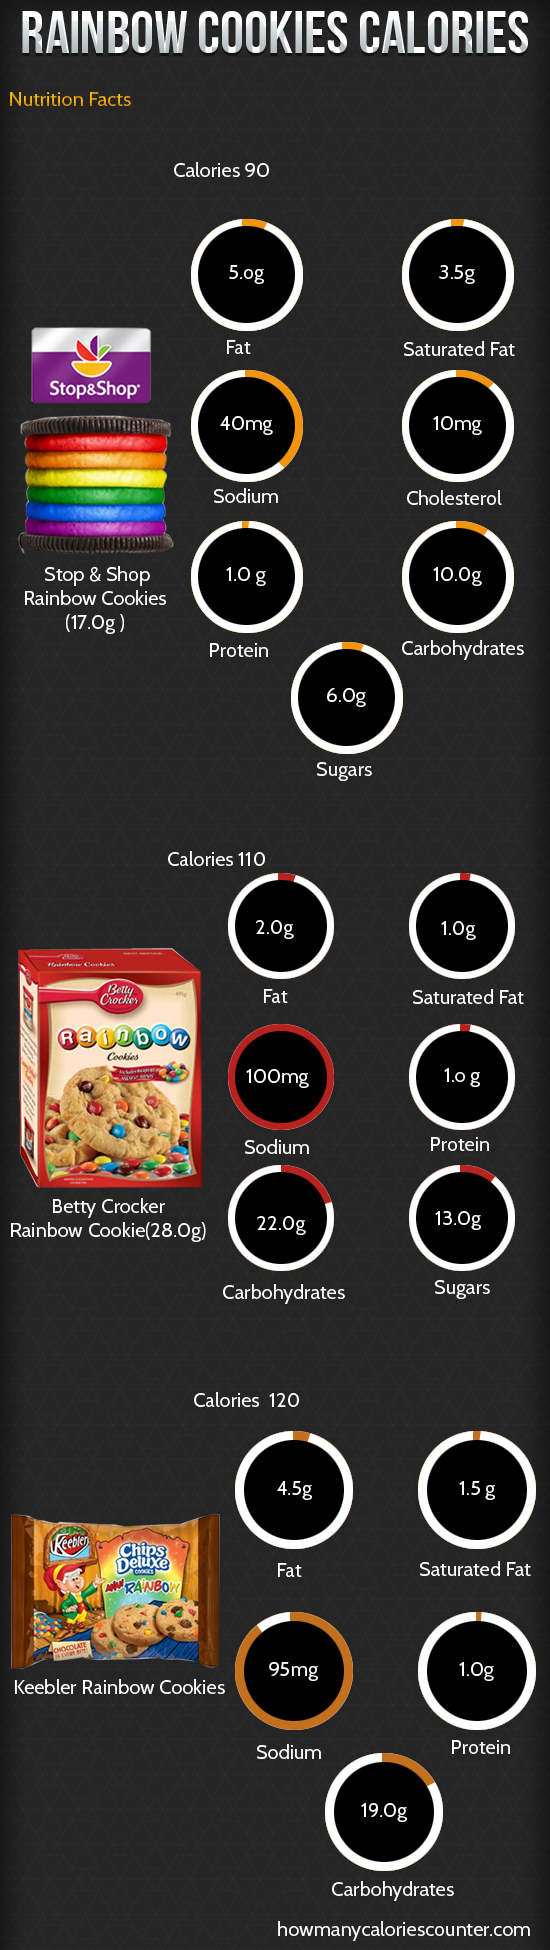 Calories in Rainbow Cookies